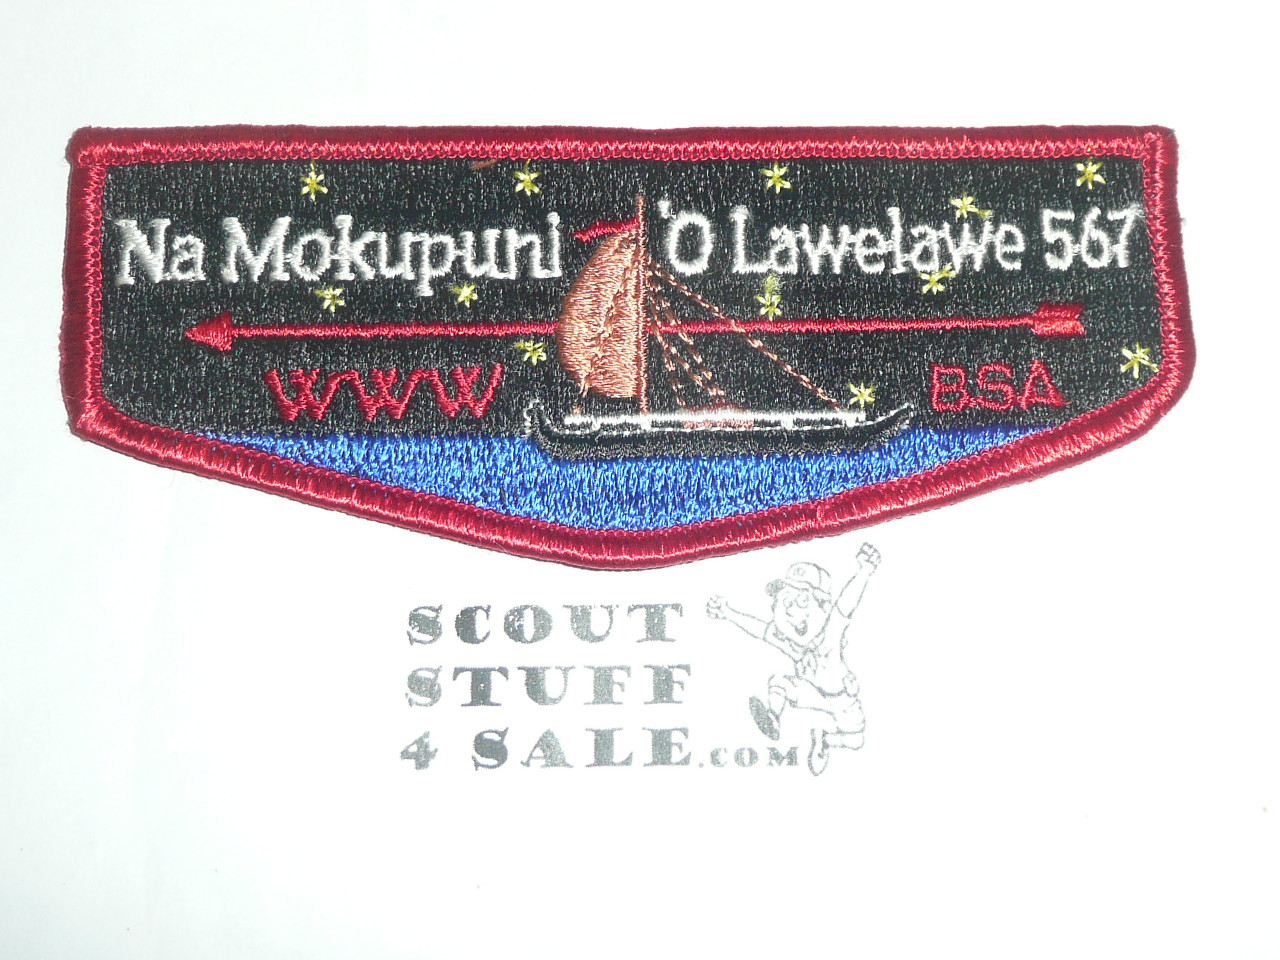 Order of the Arrow Lodge #567 NaMokupuni OLawelawe s2 Flap Patch